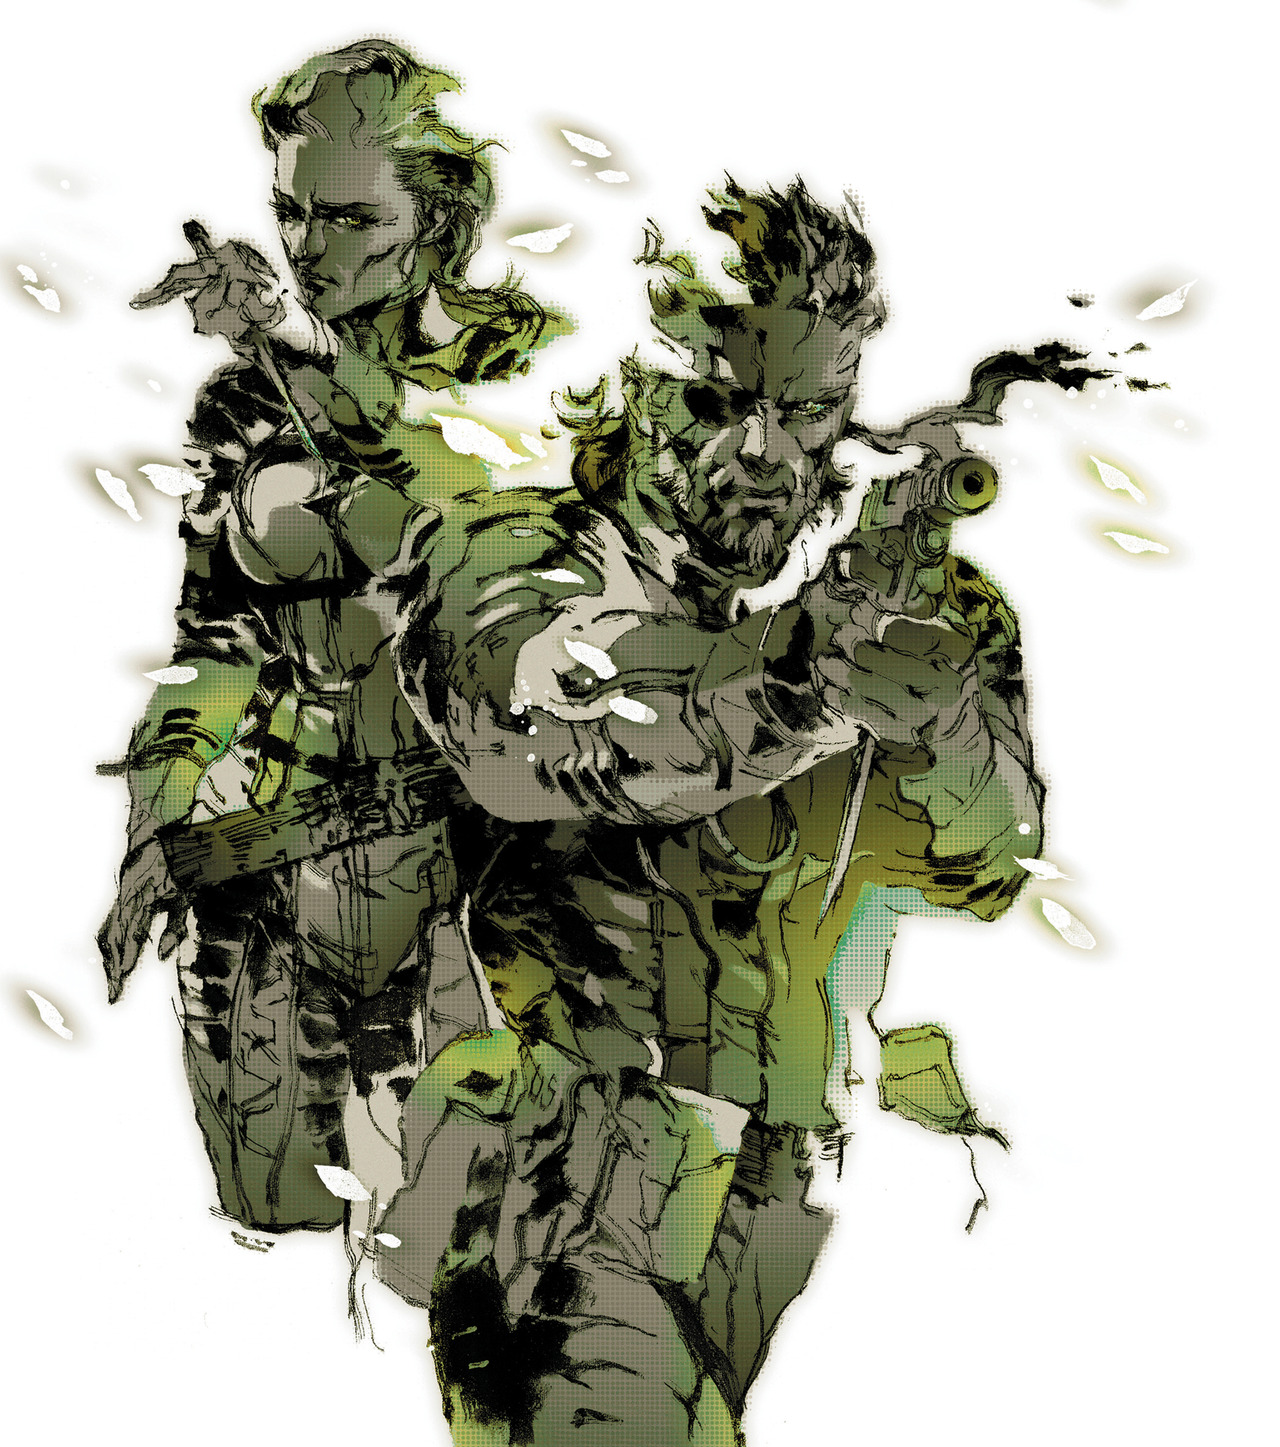 Big Boss - Metal Gear Wiki - Wikia